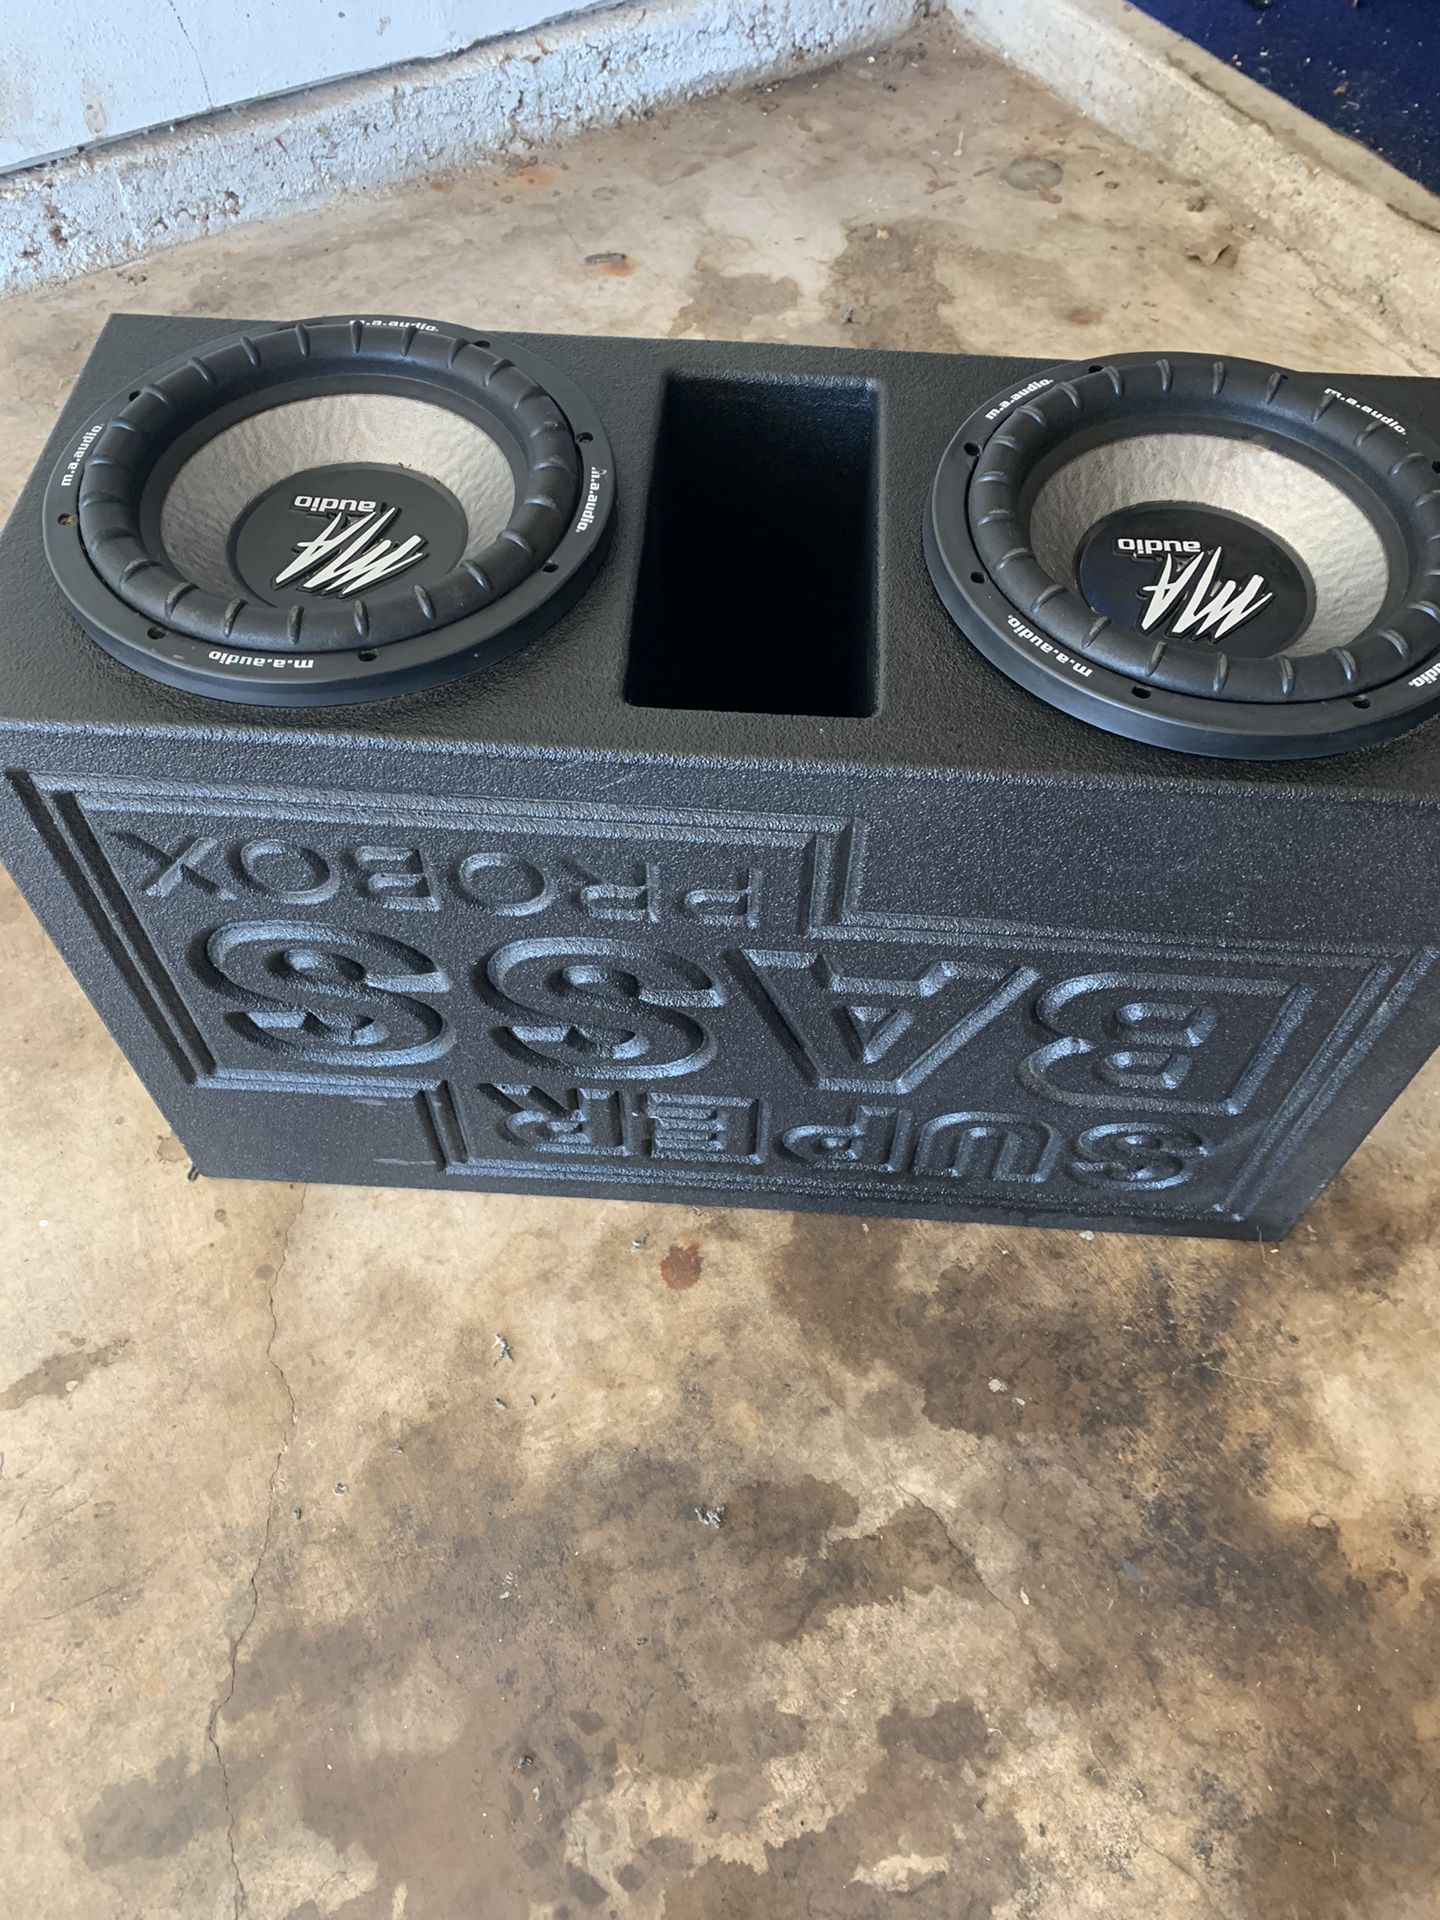 MA Audio 10s and pro box